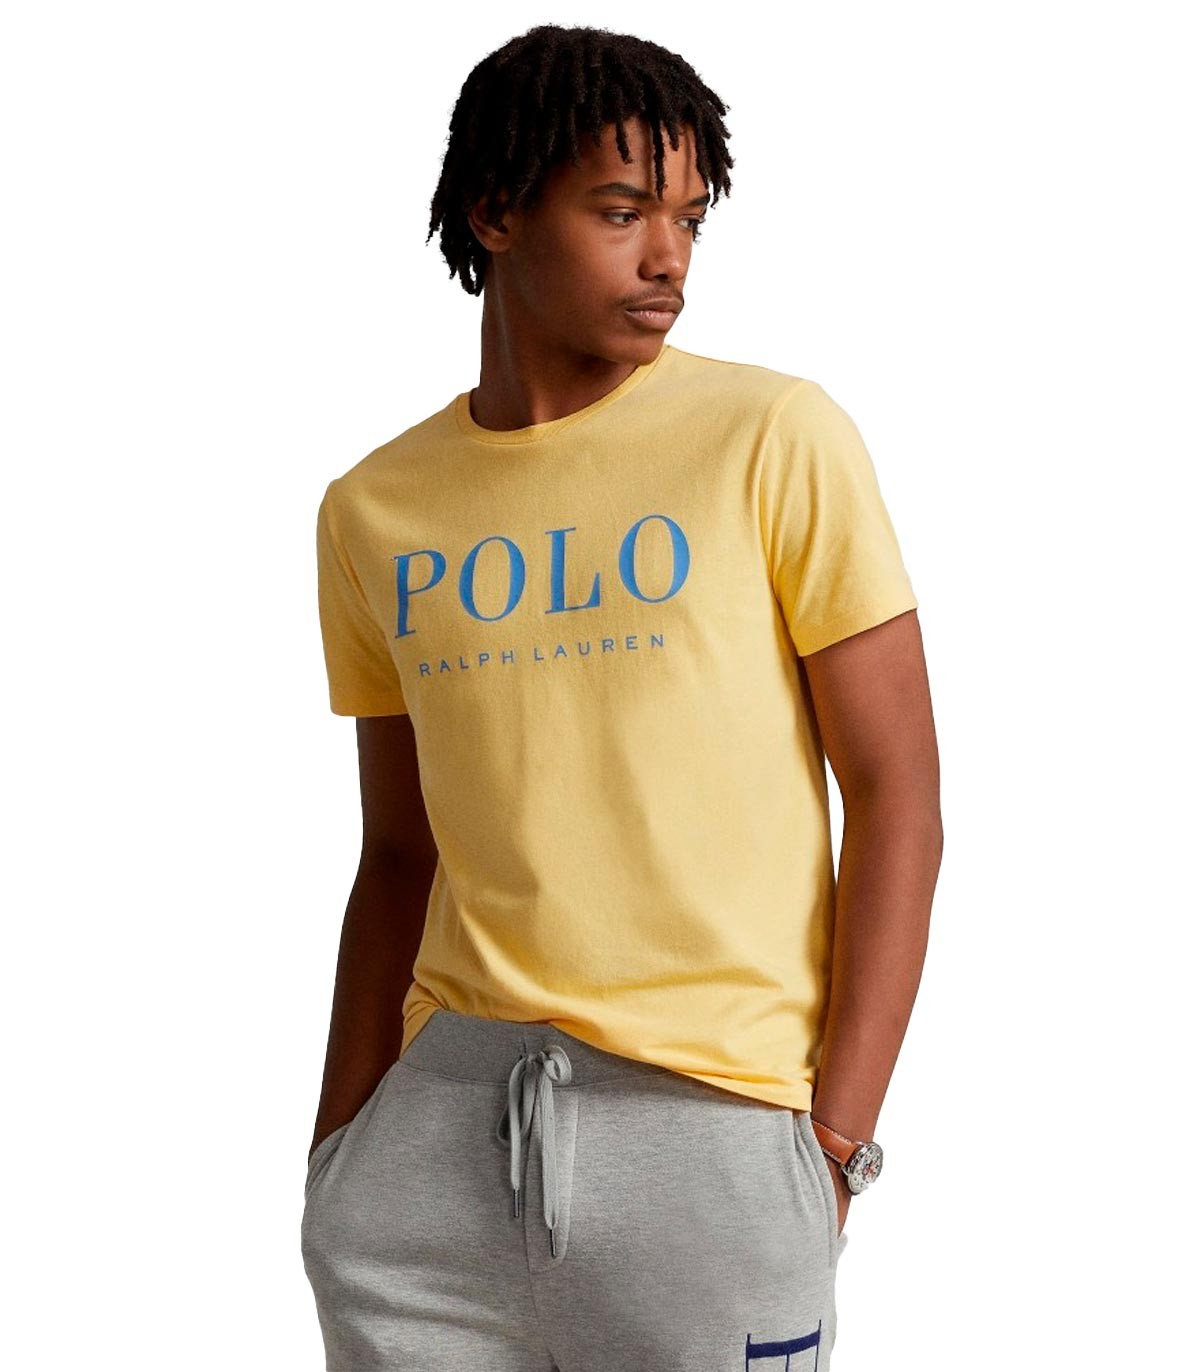 Polo Ralph Lauren - Camiseta con Estampado - Beige